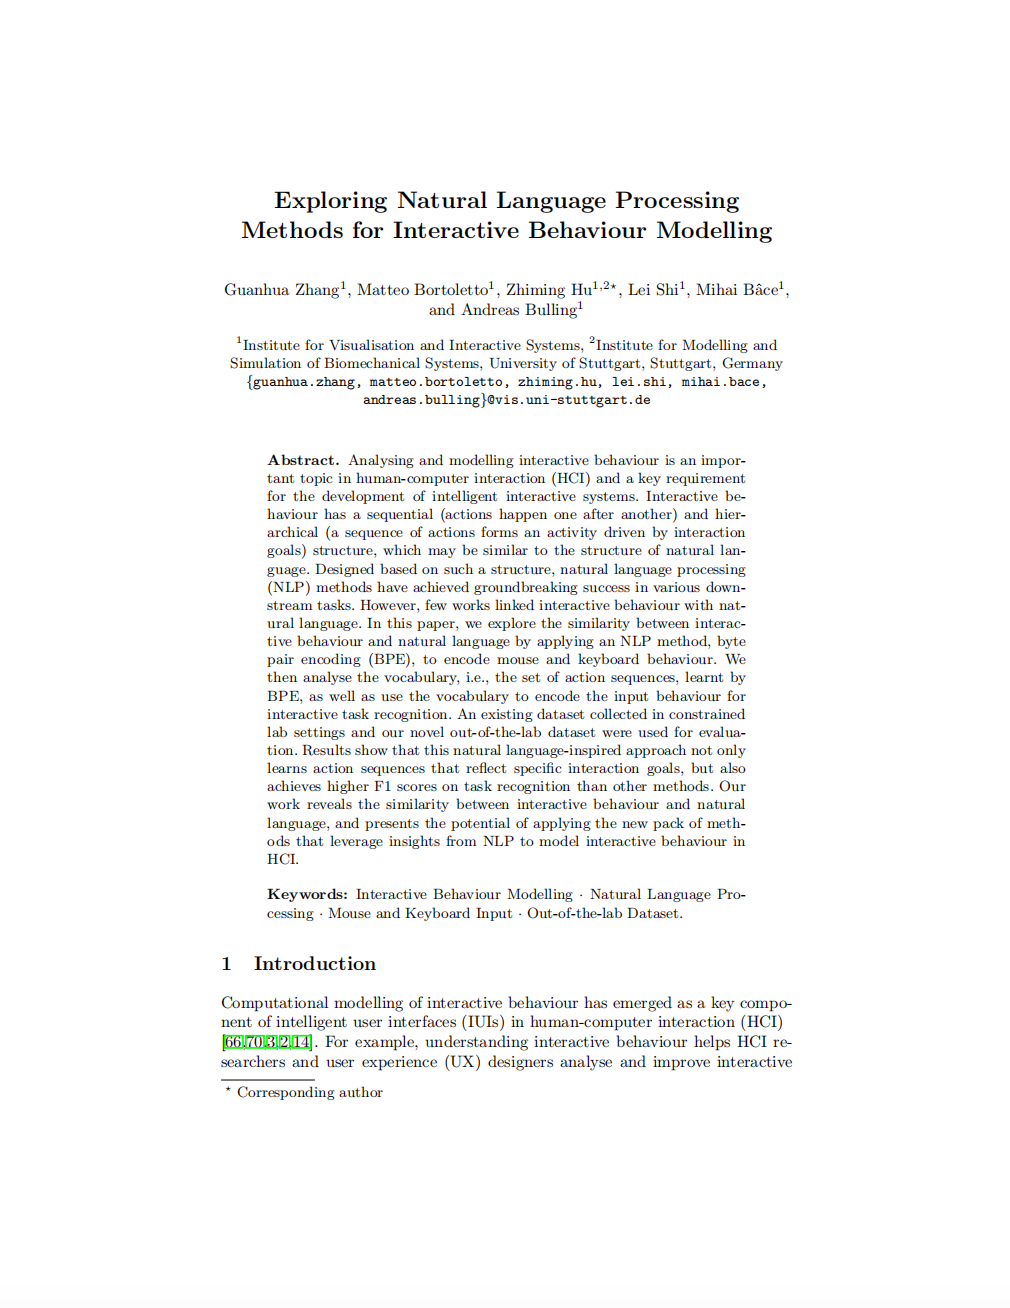 Exploring Natural Language Processing Methods for Interactive Behaviour Modelling